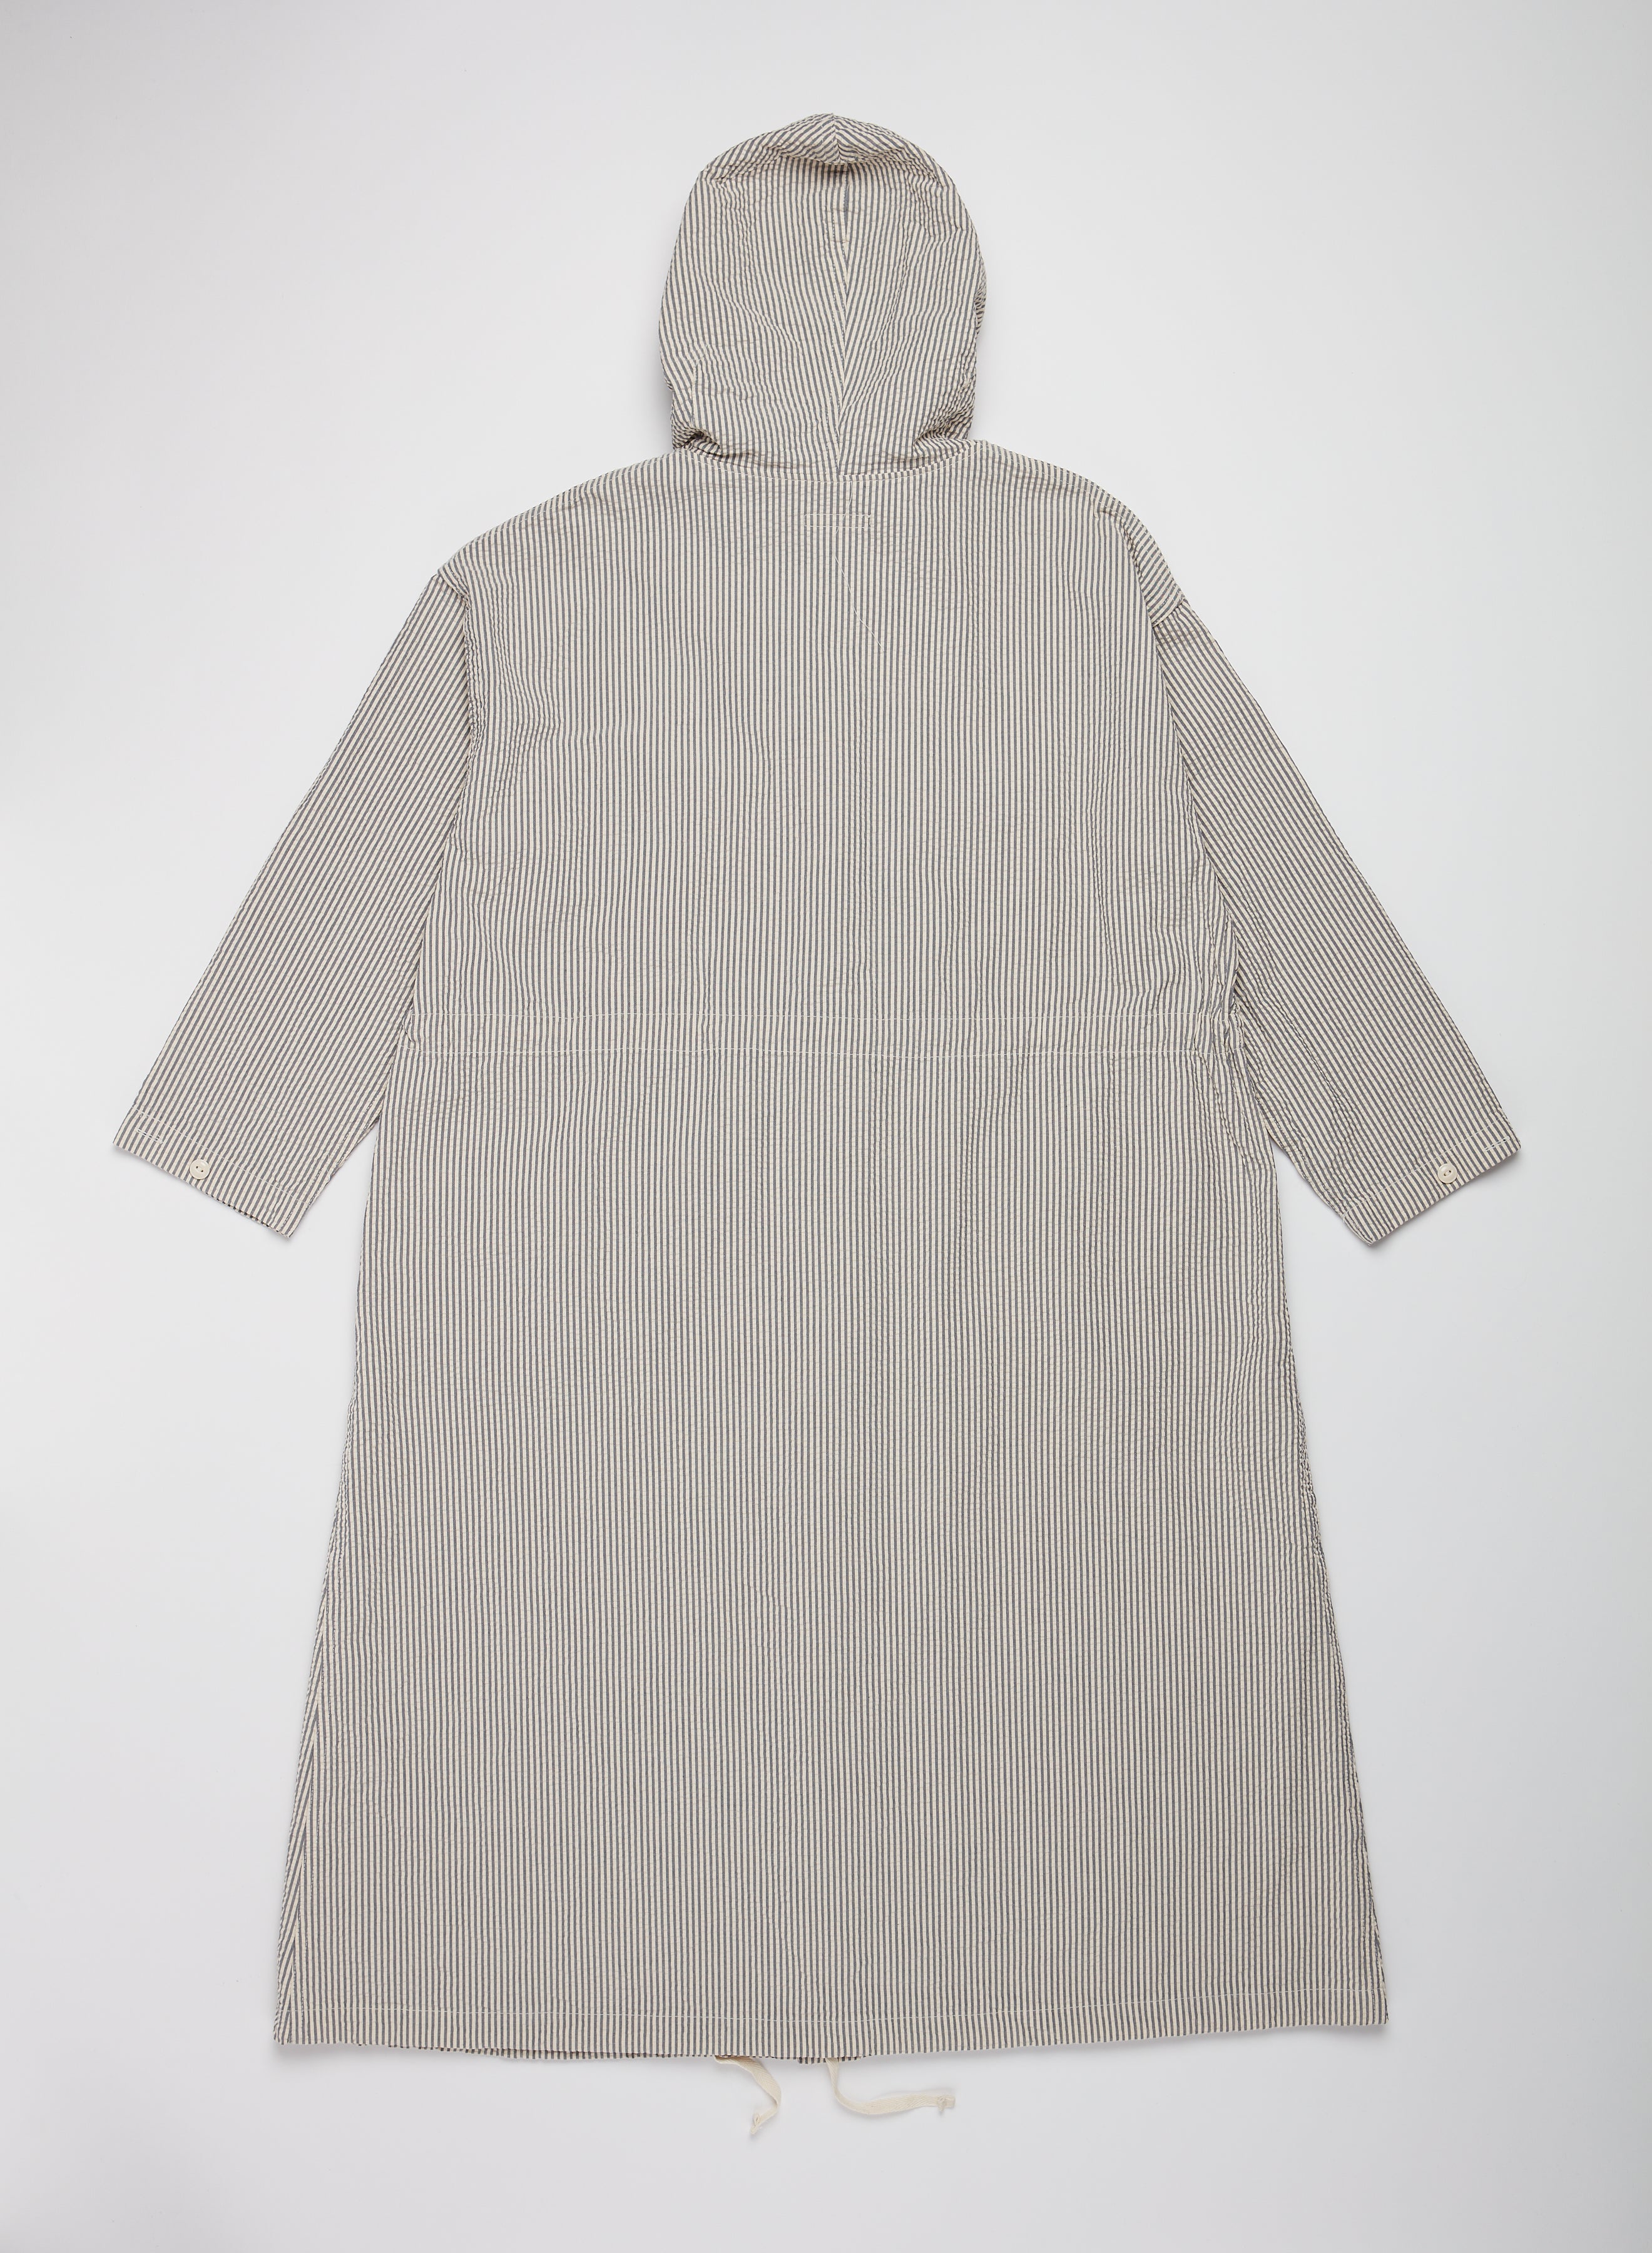 Cagoule Dress - Navy / Natural Cotton Seersucker